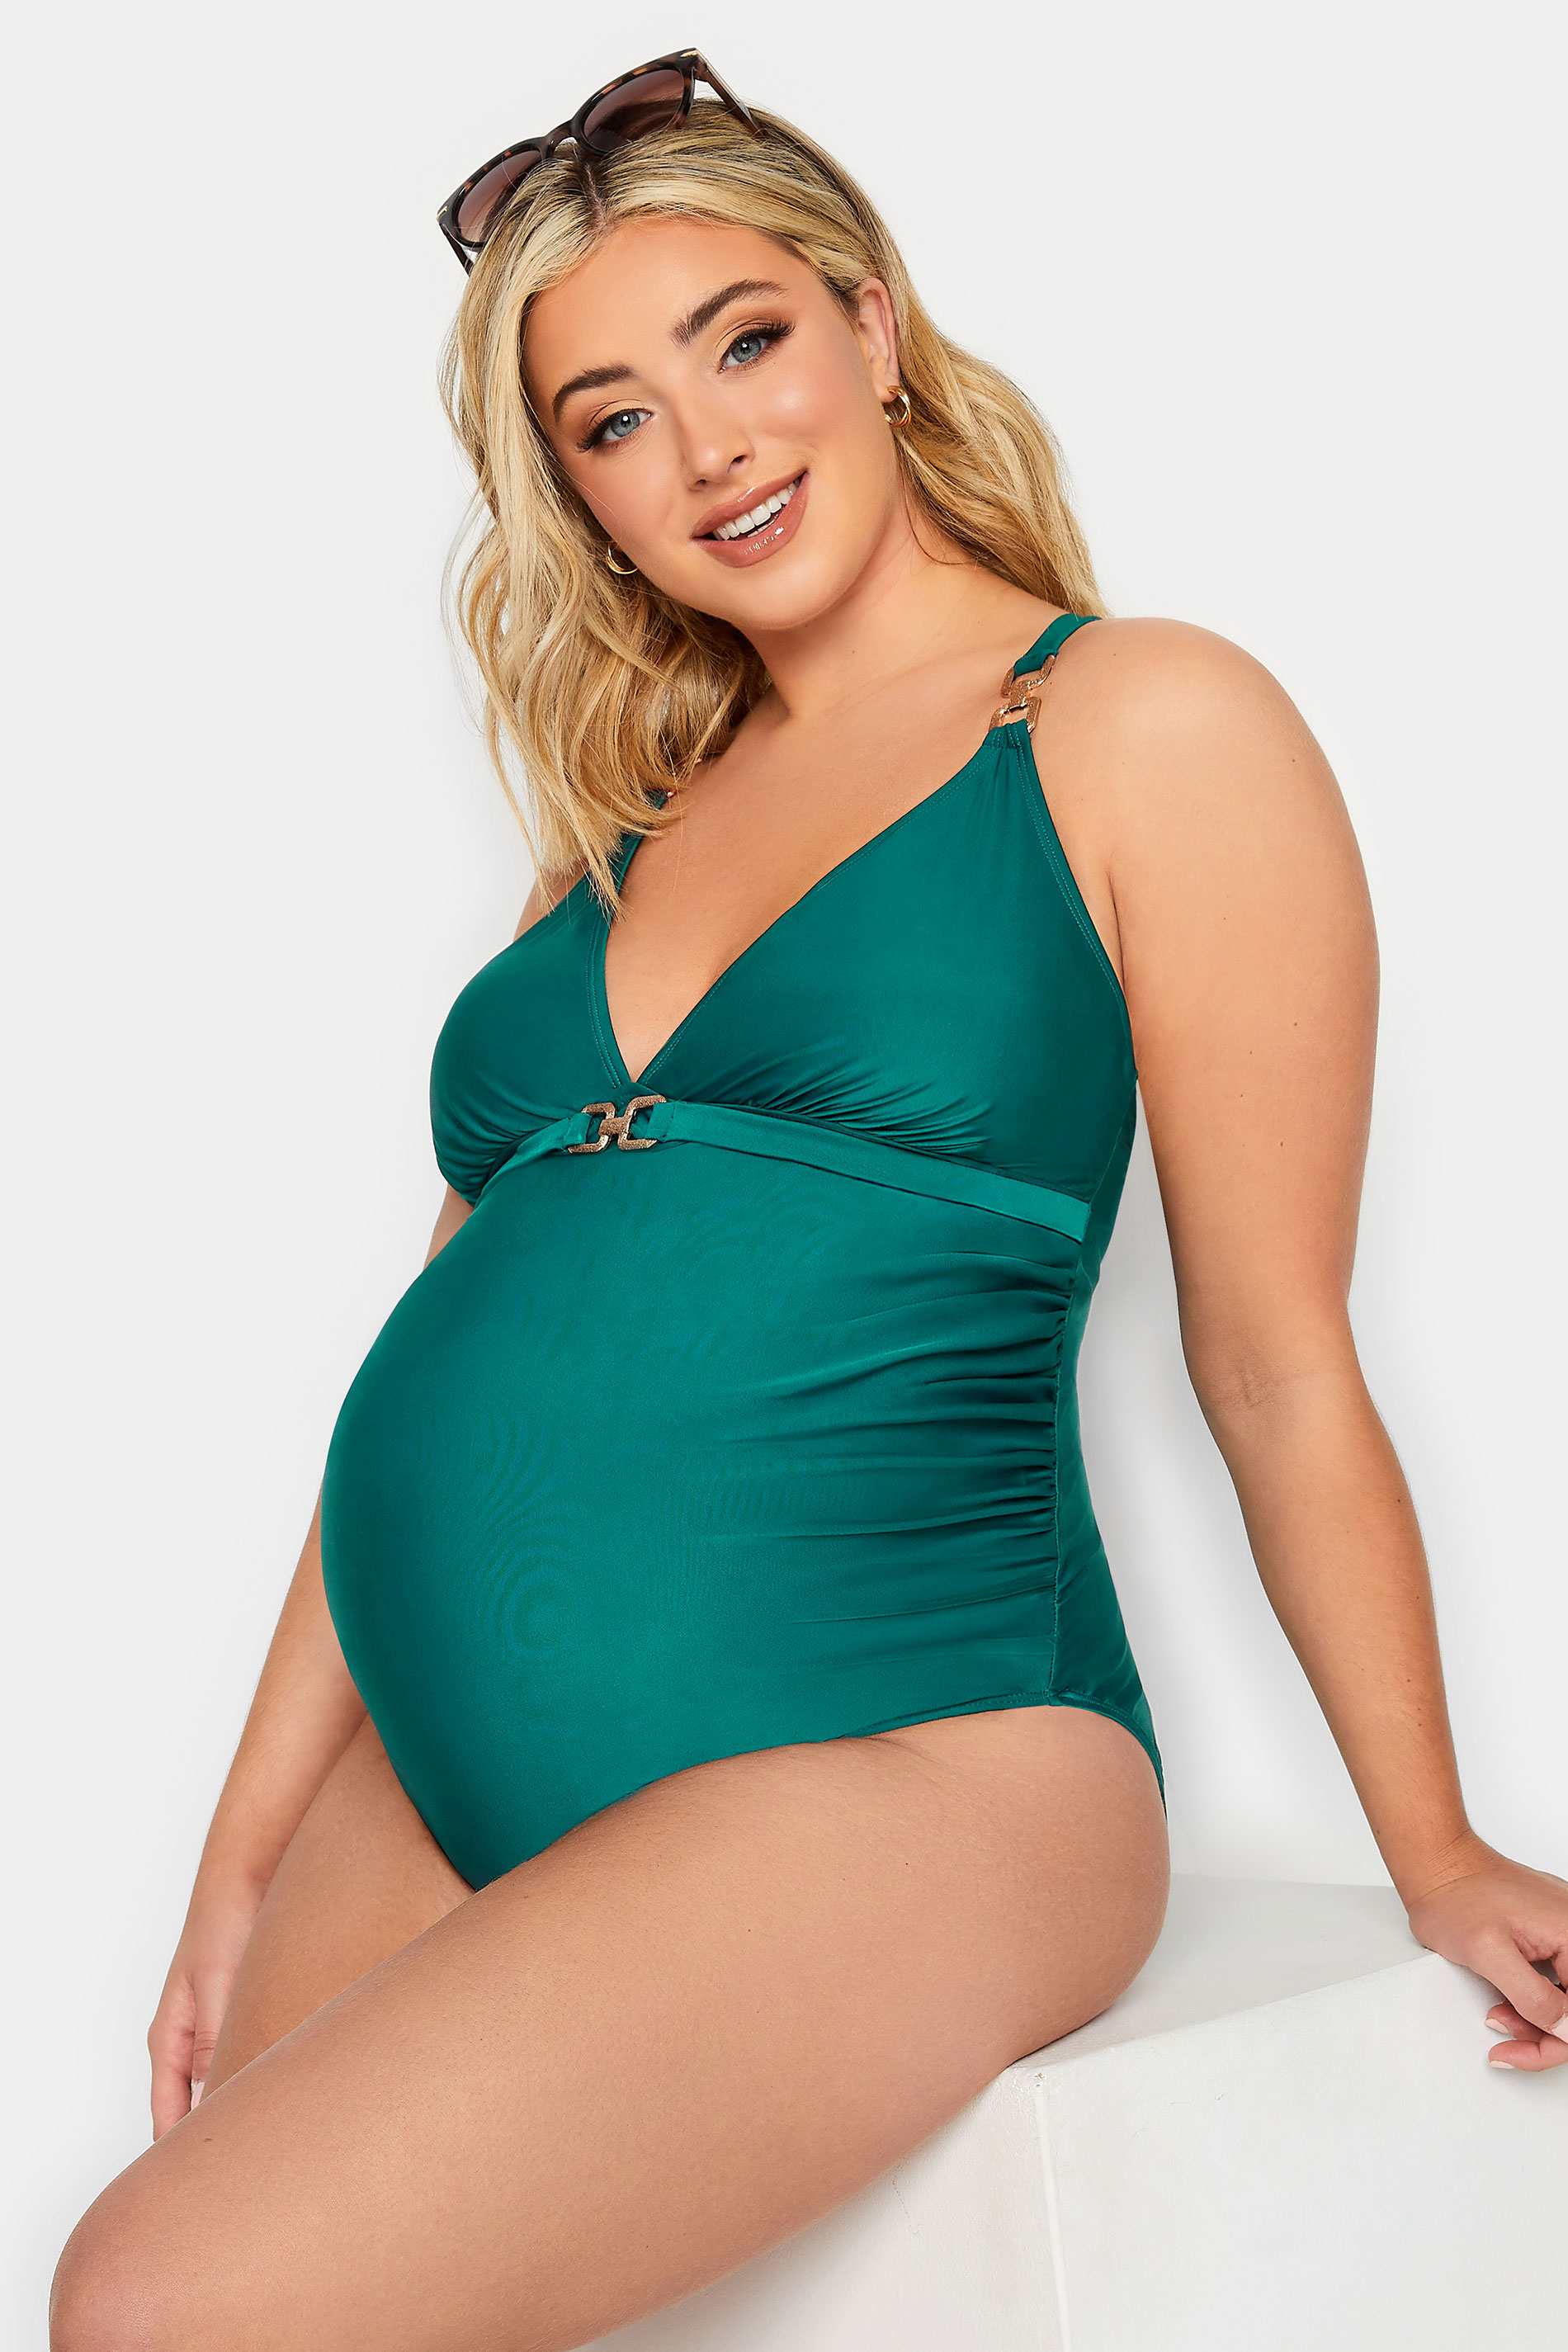 Plus Size Women Ladies Maternity Swimsuit Pregnant Swimwear One